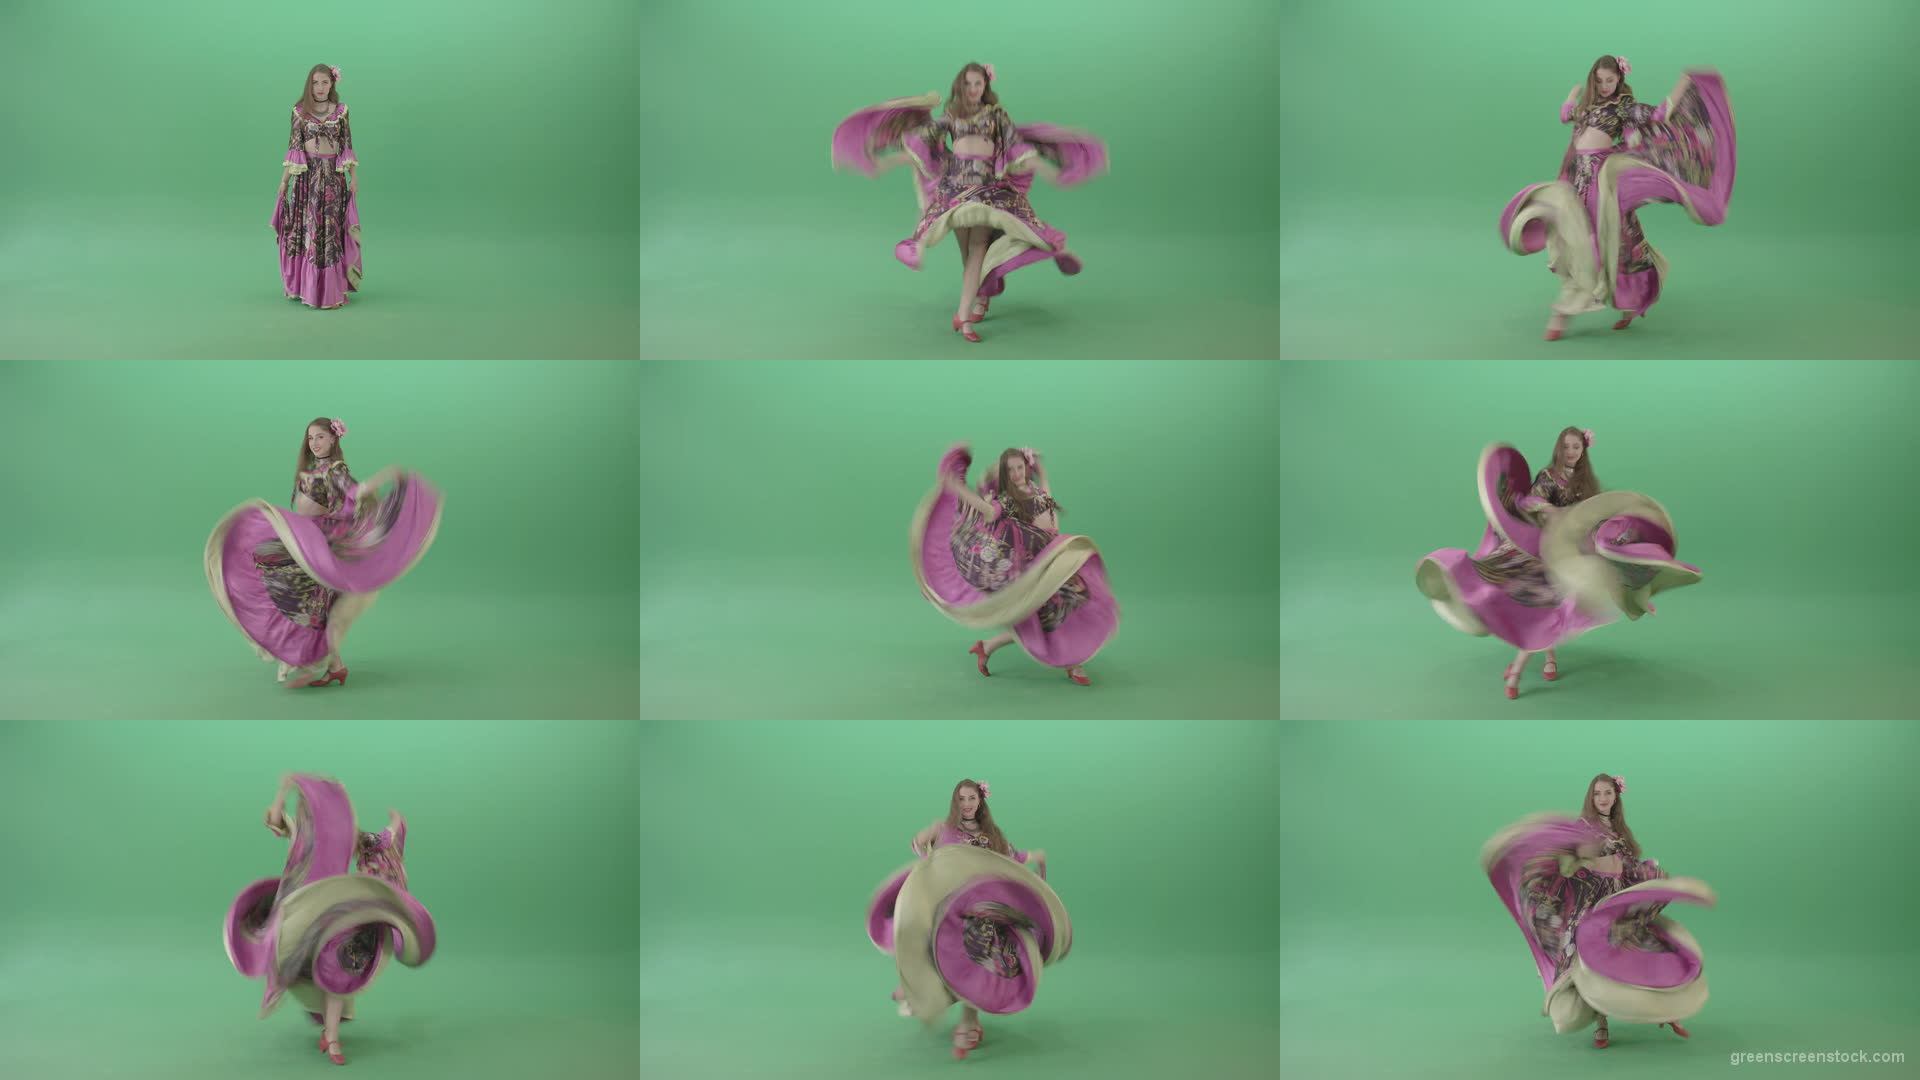 Tzigane-romana-gypsy-girl-waving-pink-dress-dancing-isolated-in-green-screen-studio-4K-Green-Screen-Video-Footage-1920 Green Screen Stock